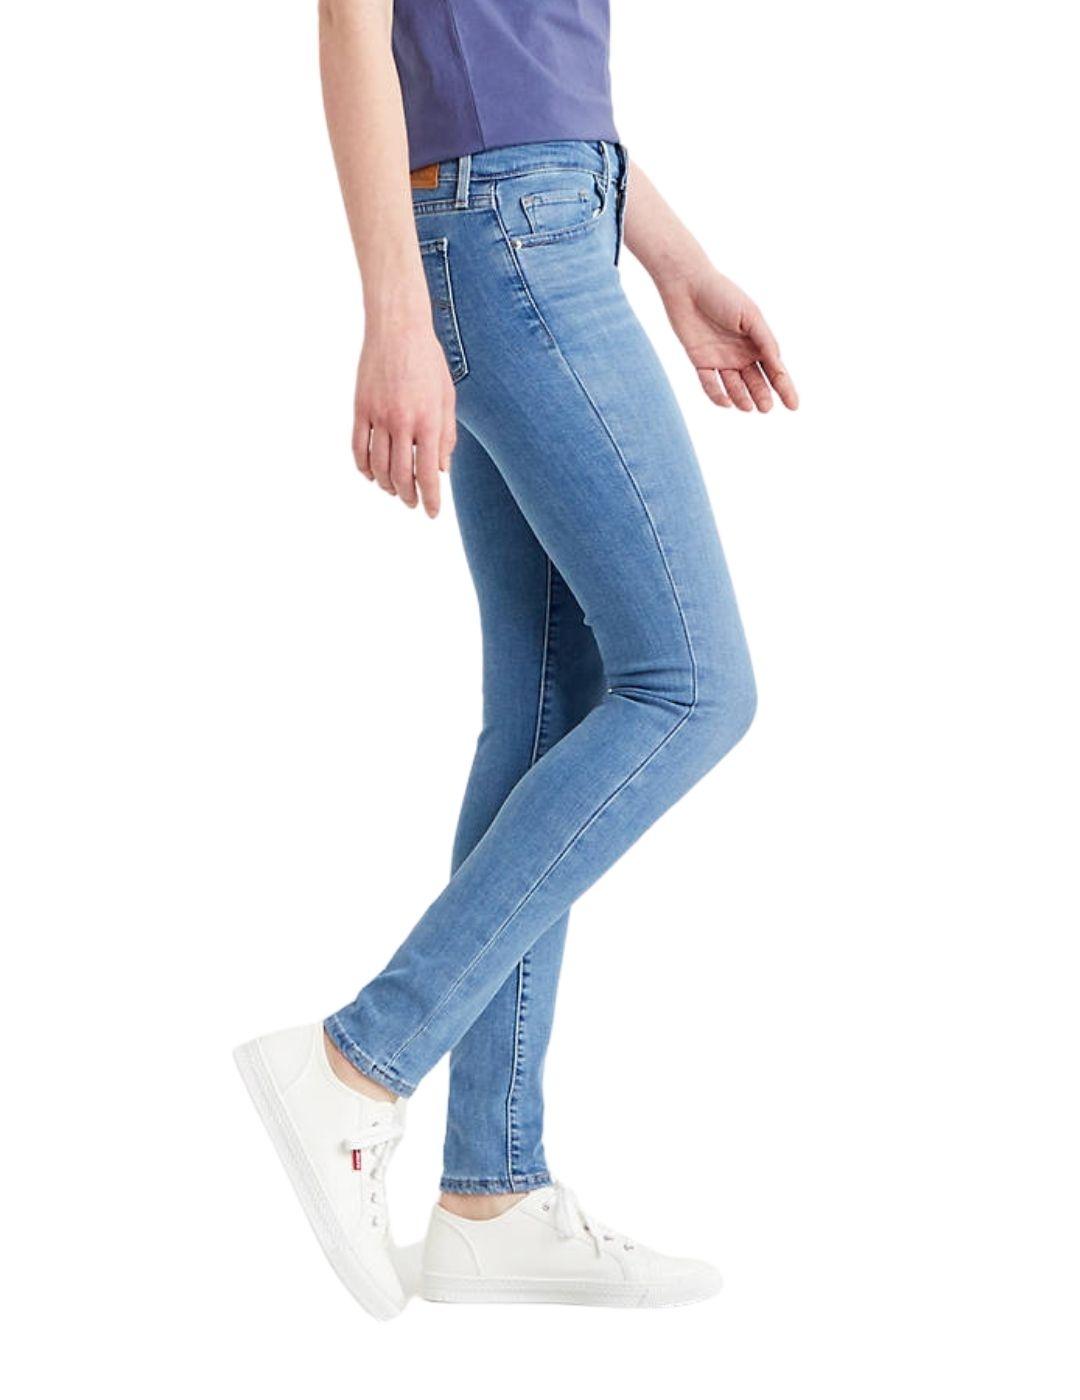 Pantalón Levis  711 Skinny Jeans para mujer